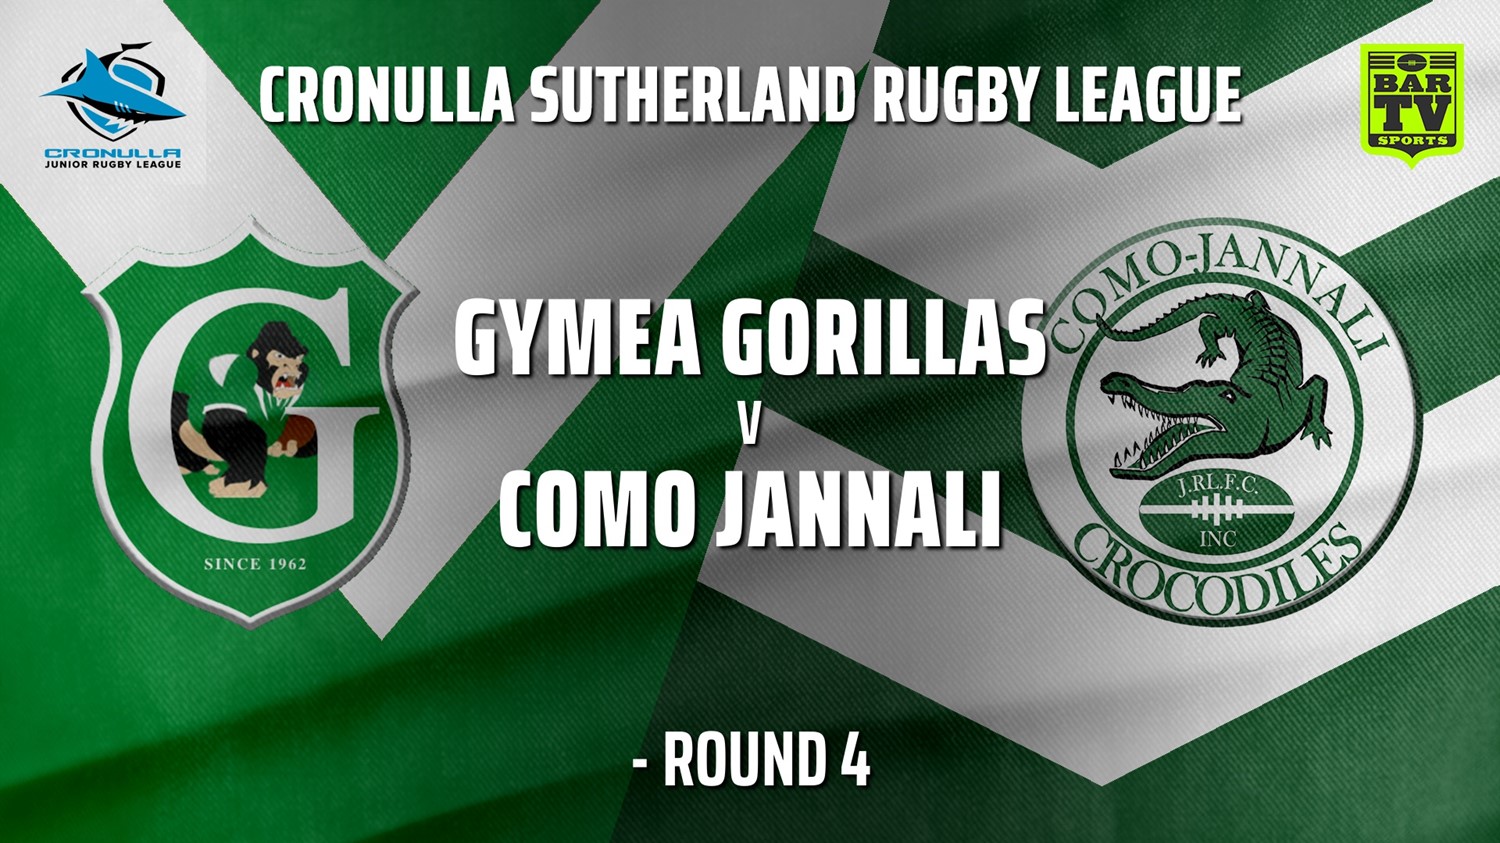 210522-Cronulla JRL Under 12 Silver Round 4 - Gymea Gorillas v Como Jannali Crocodiles Minigame Slate Image